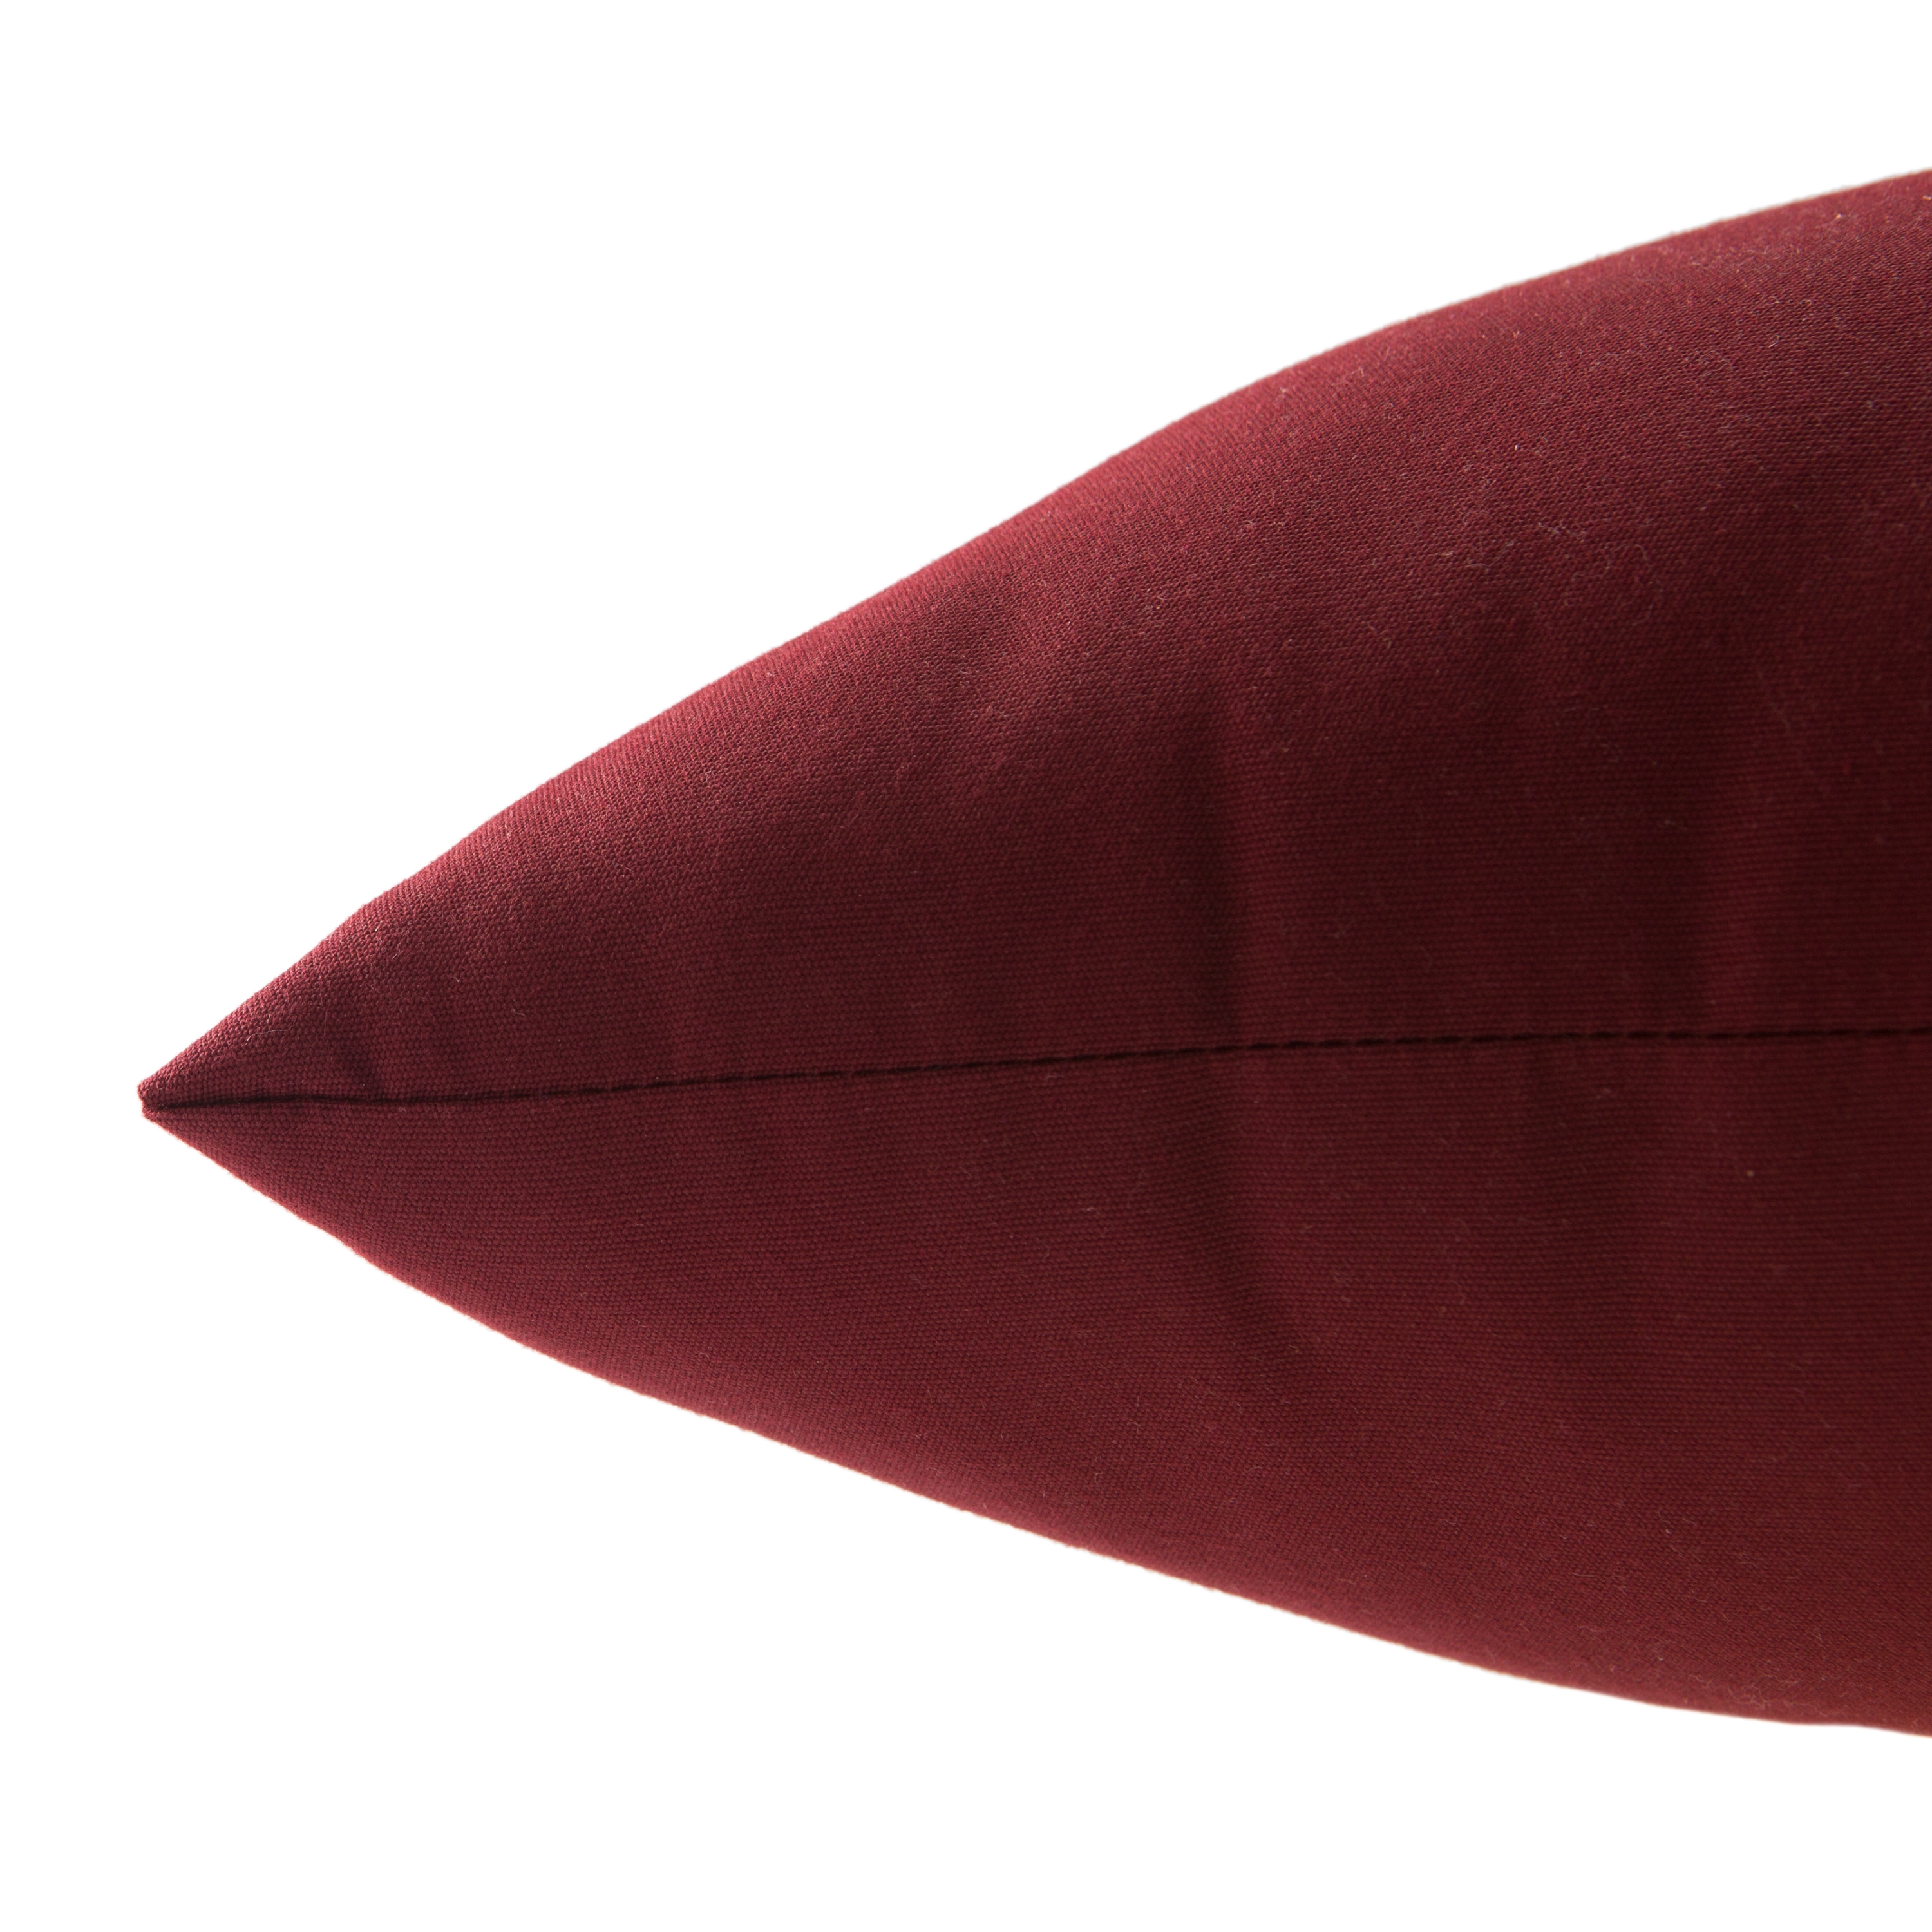 Design (US) Maroon 17"X17" Pillow - Image 2